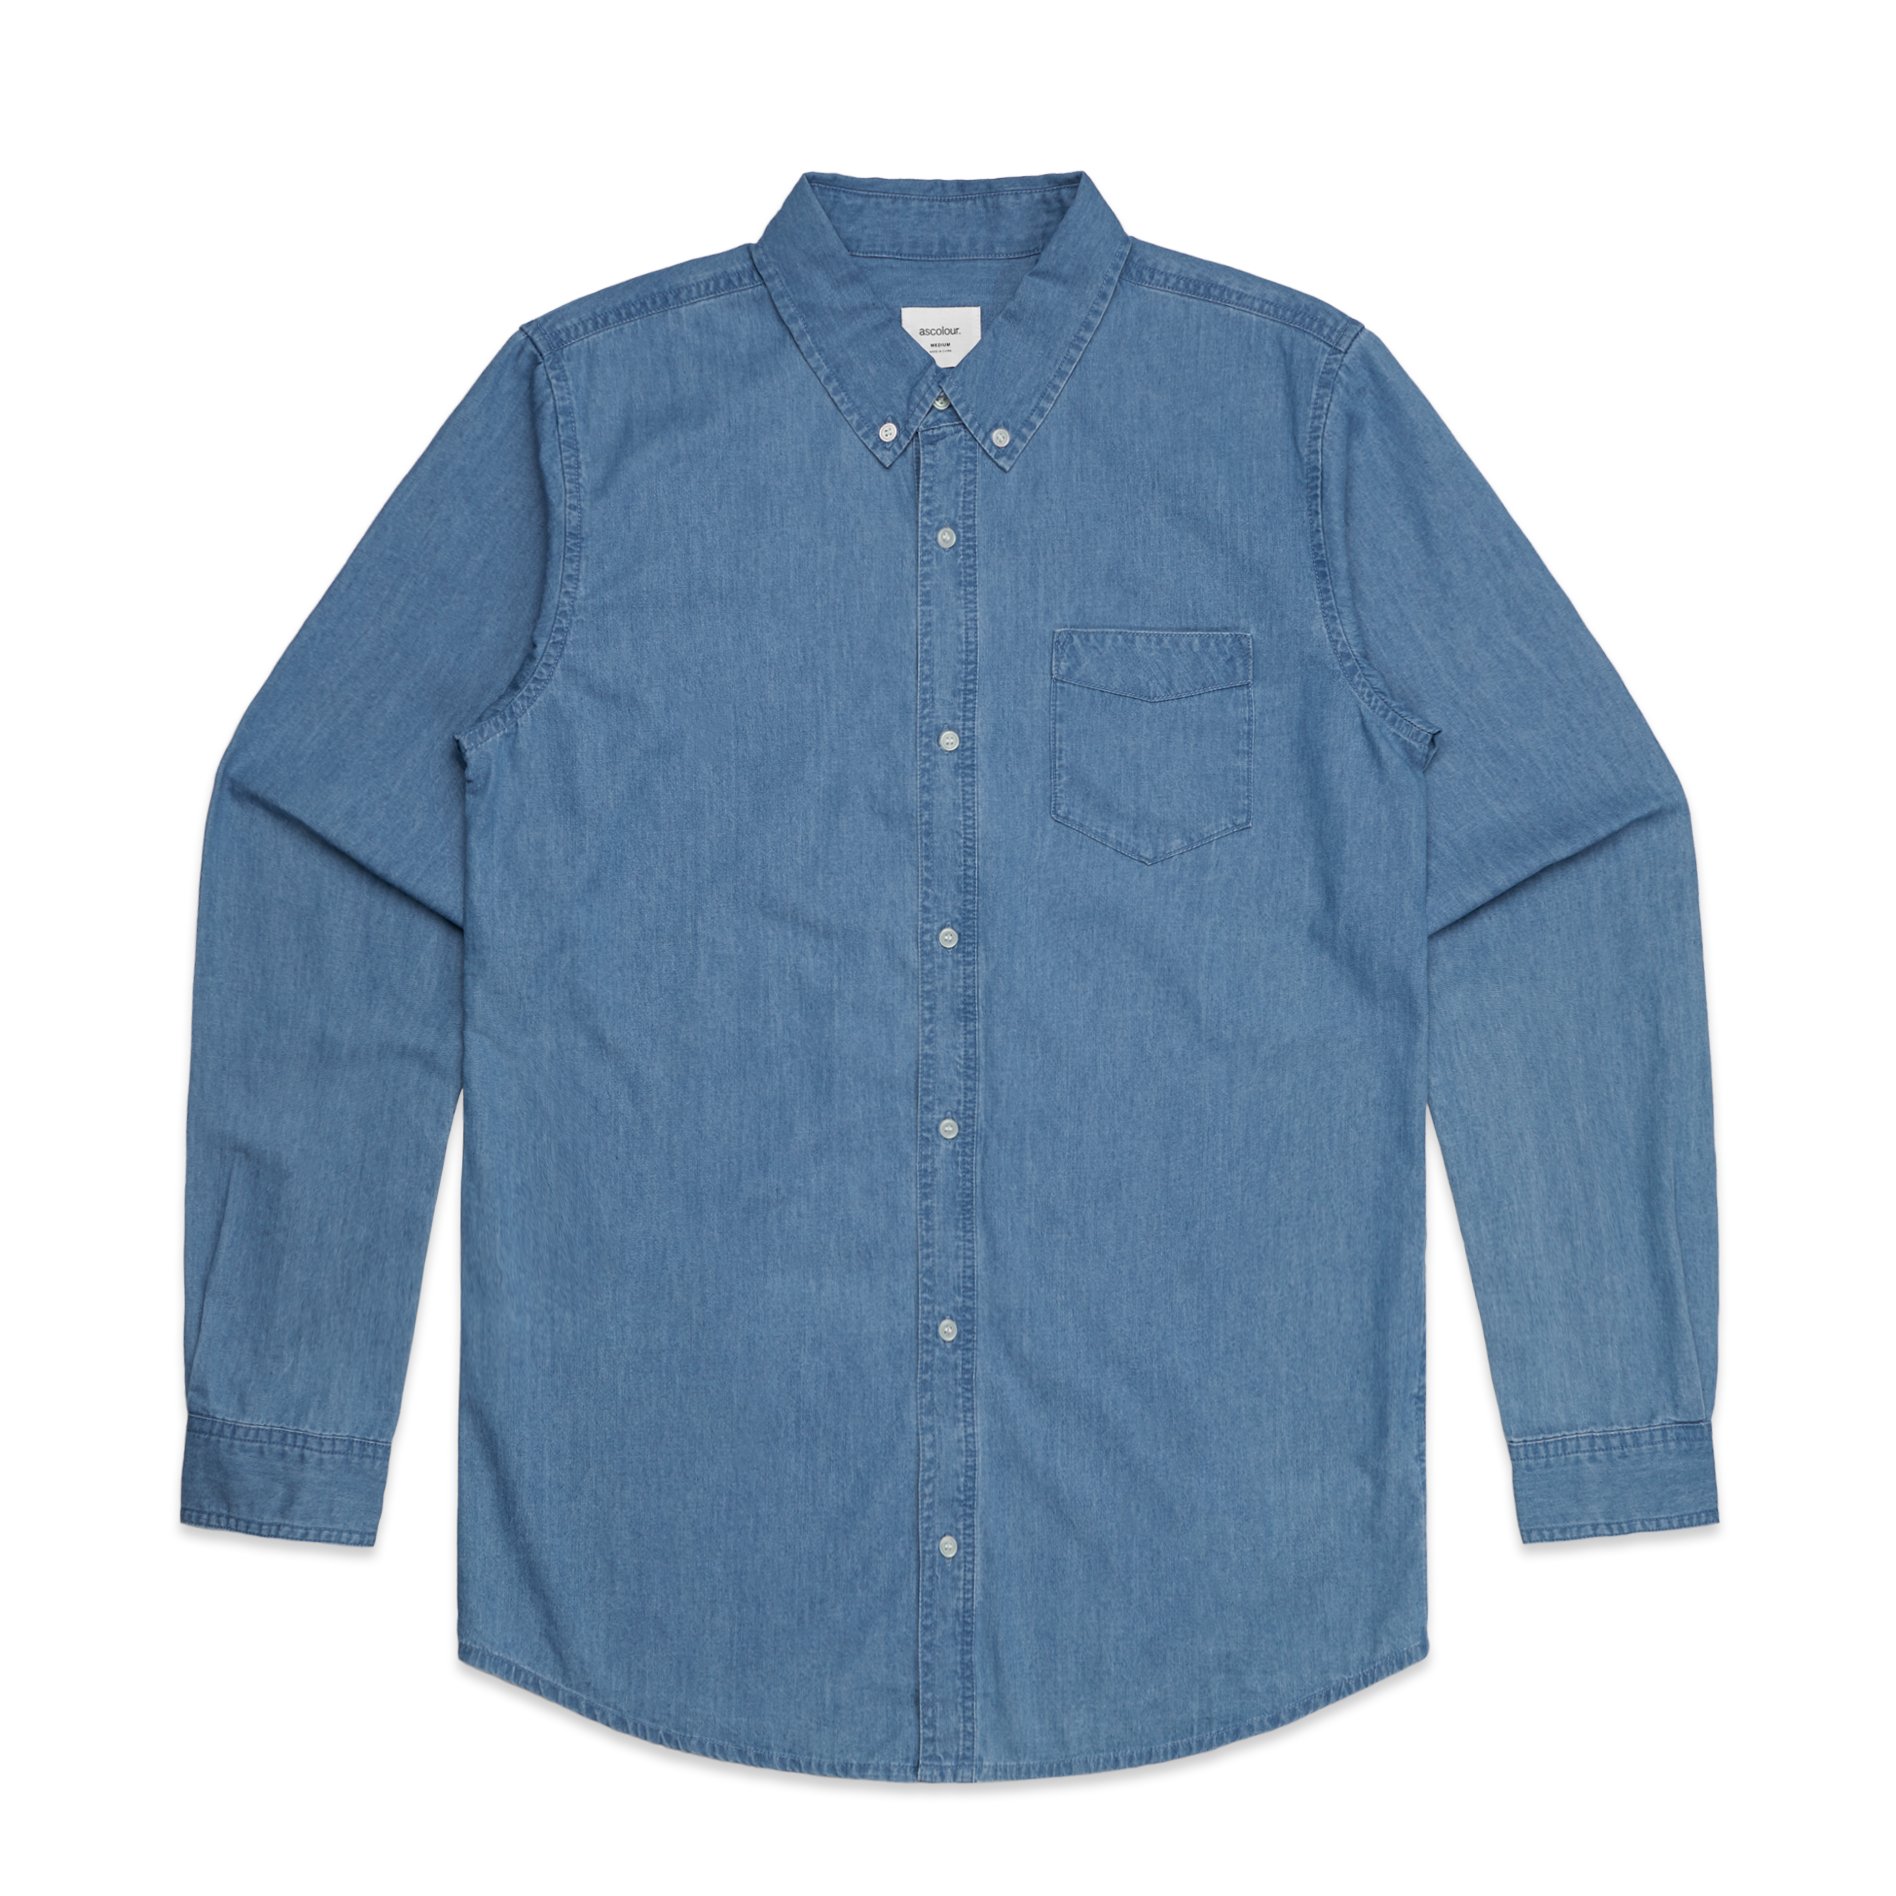 AS Colour Blue Denim Shirt - 5409